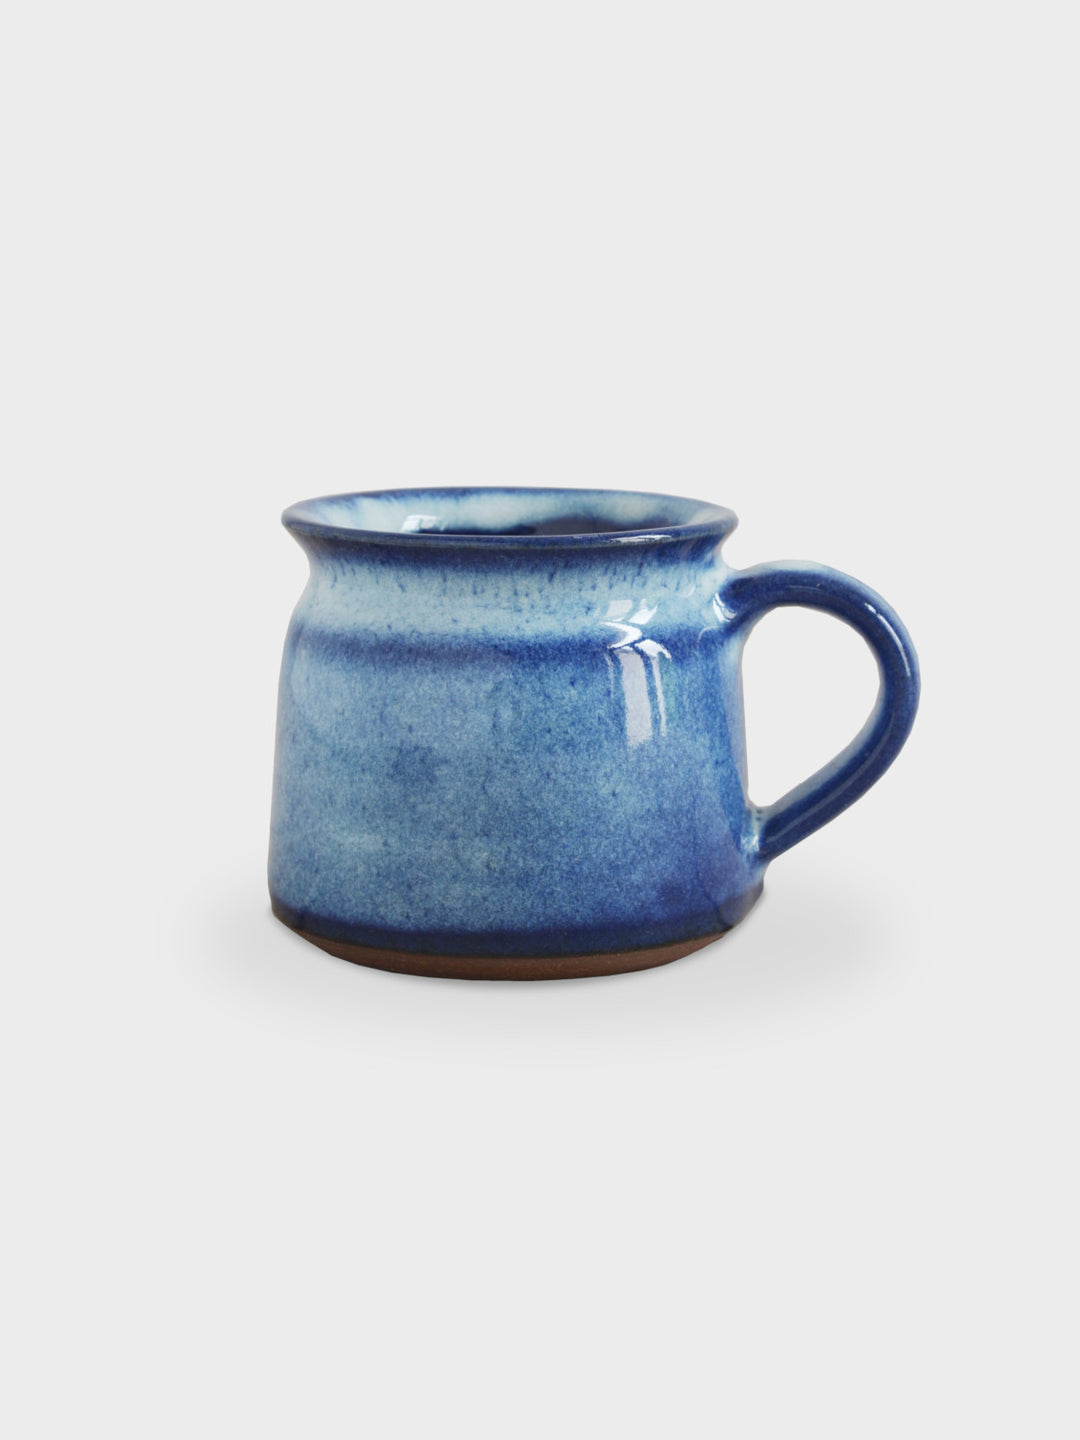 Handmade mug with Blue Glaze